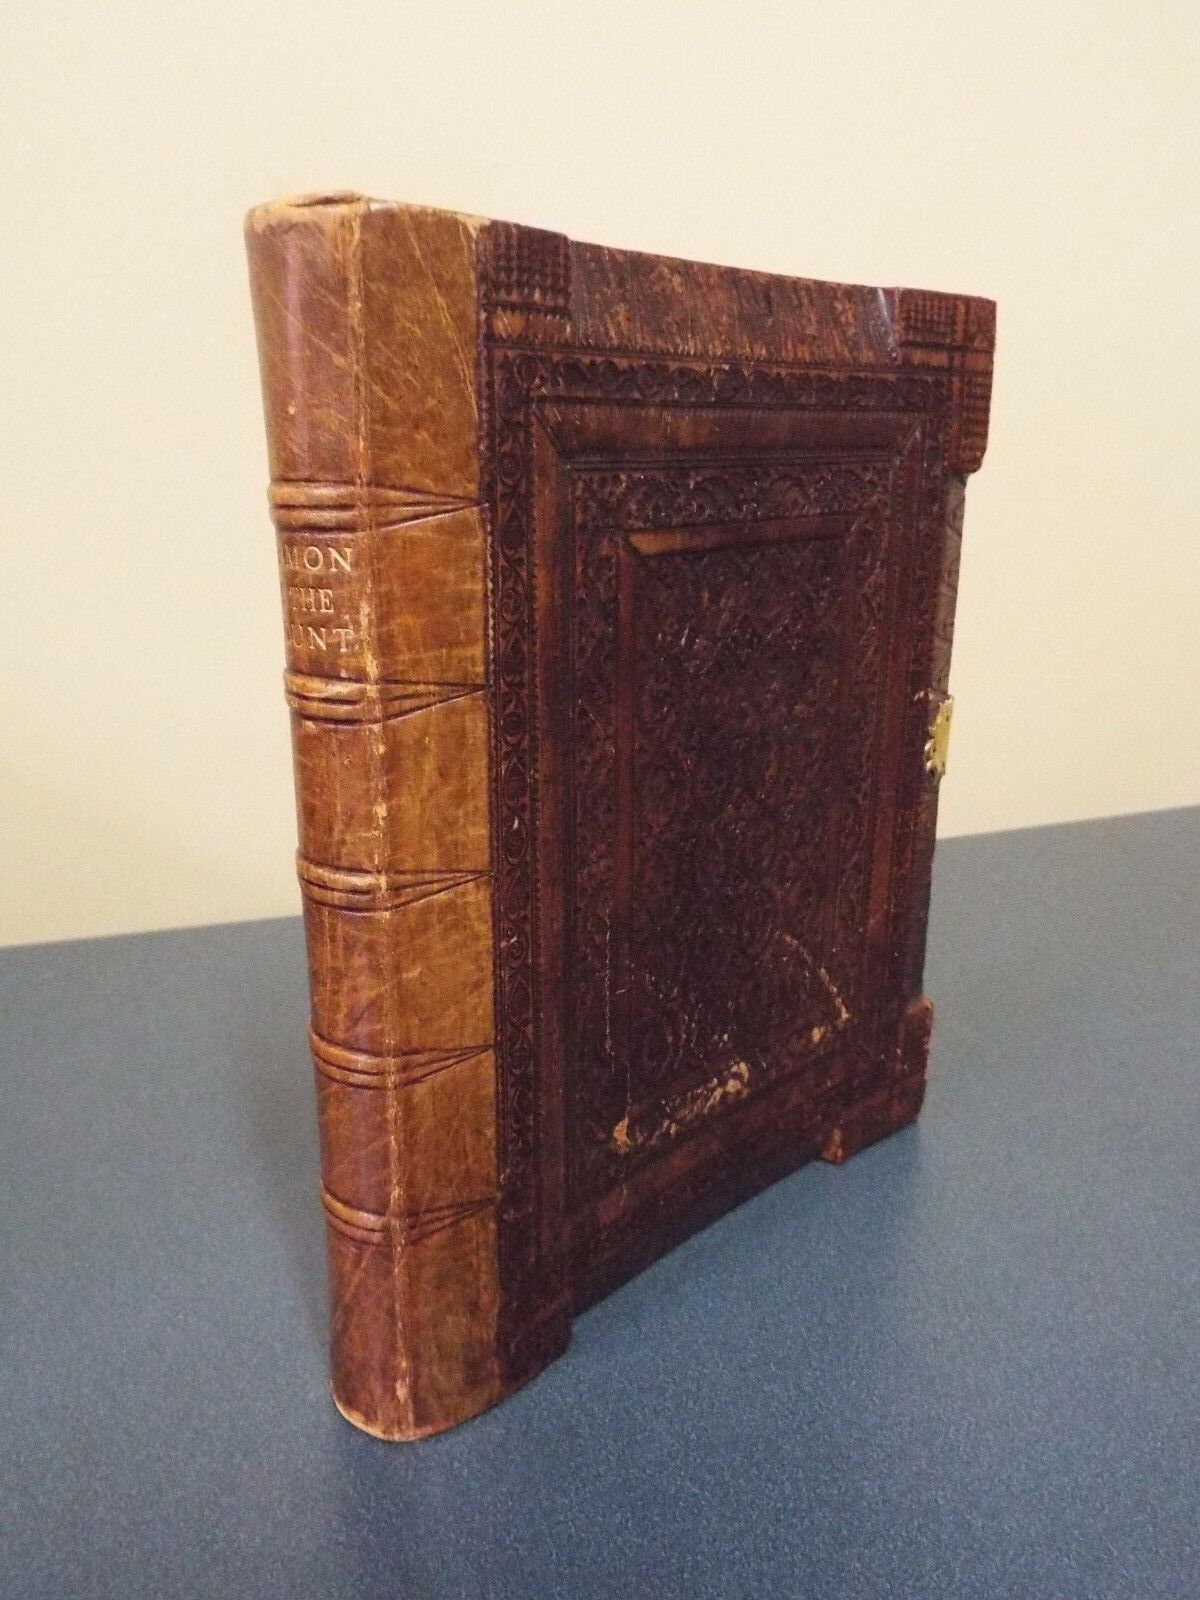 Magnificent Illuminated Manuscript - Circa 1890's - Sermon on the Mount/Bible